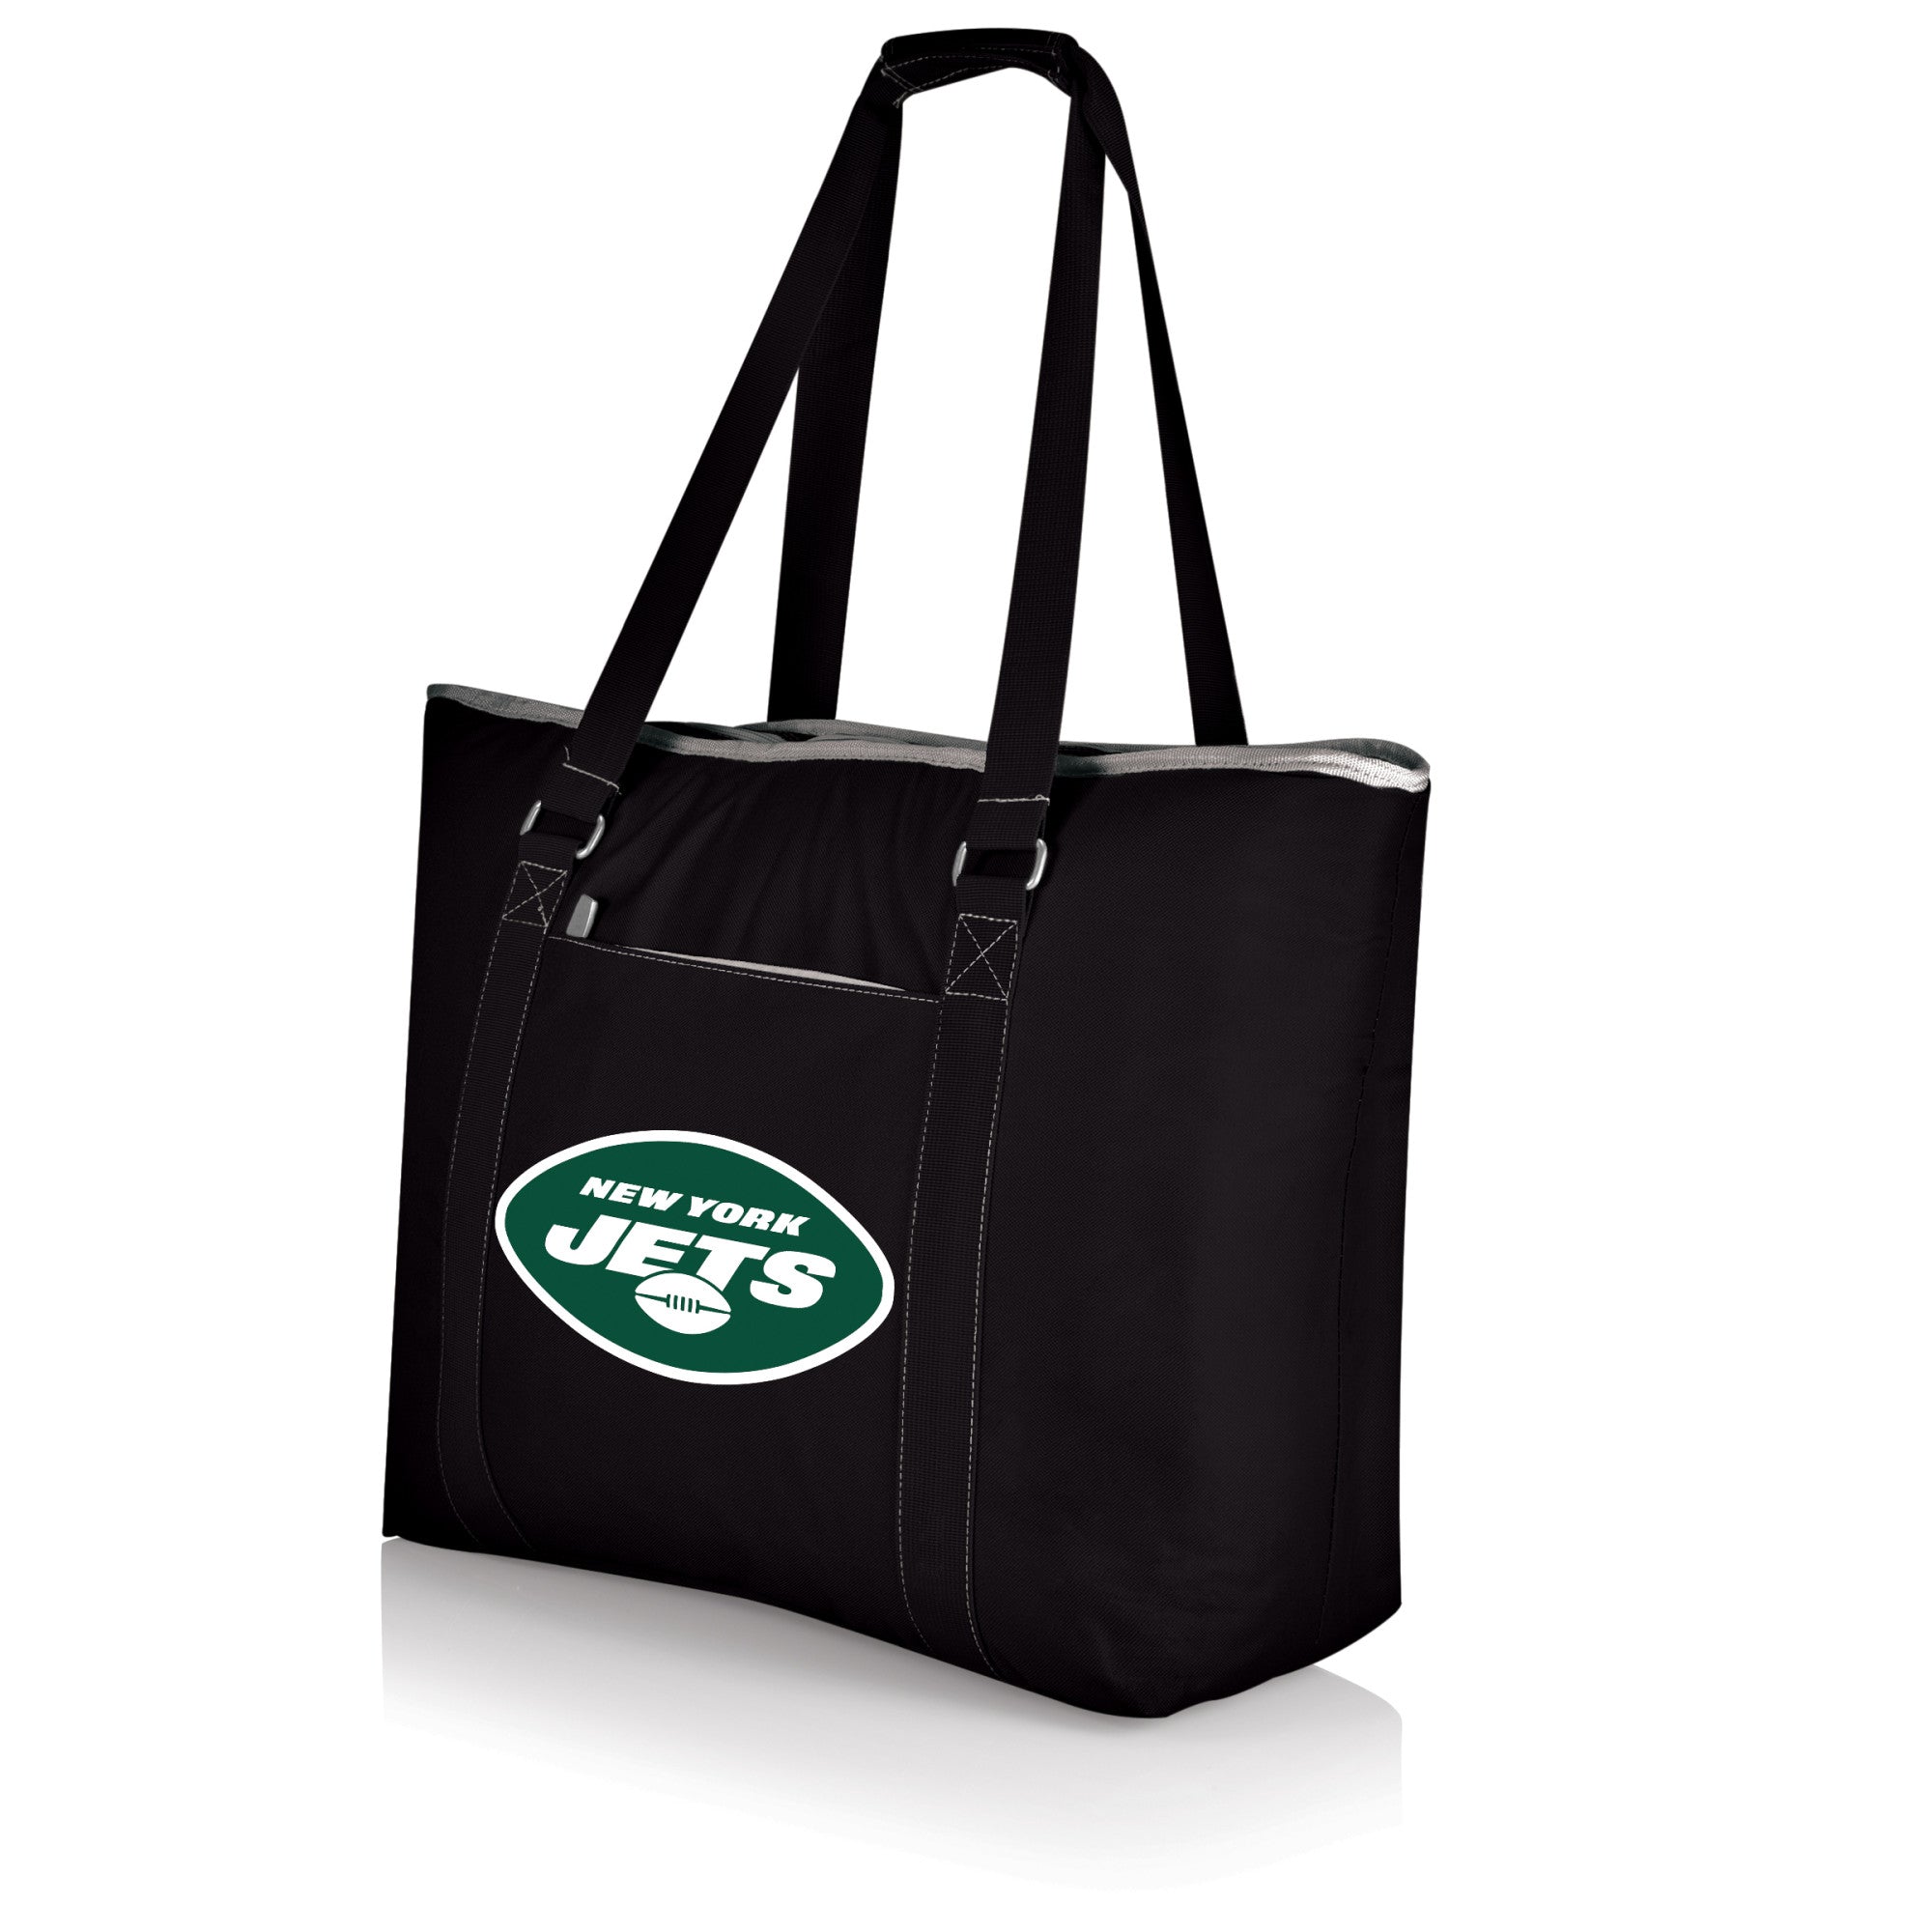 New York Jets - Tahoe XL Cooler Tote Bag